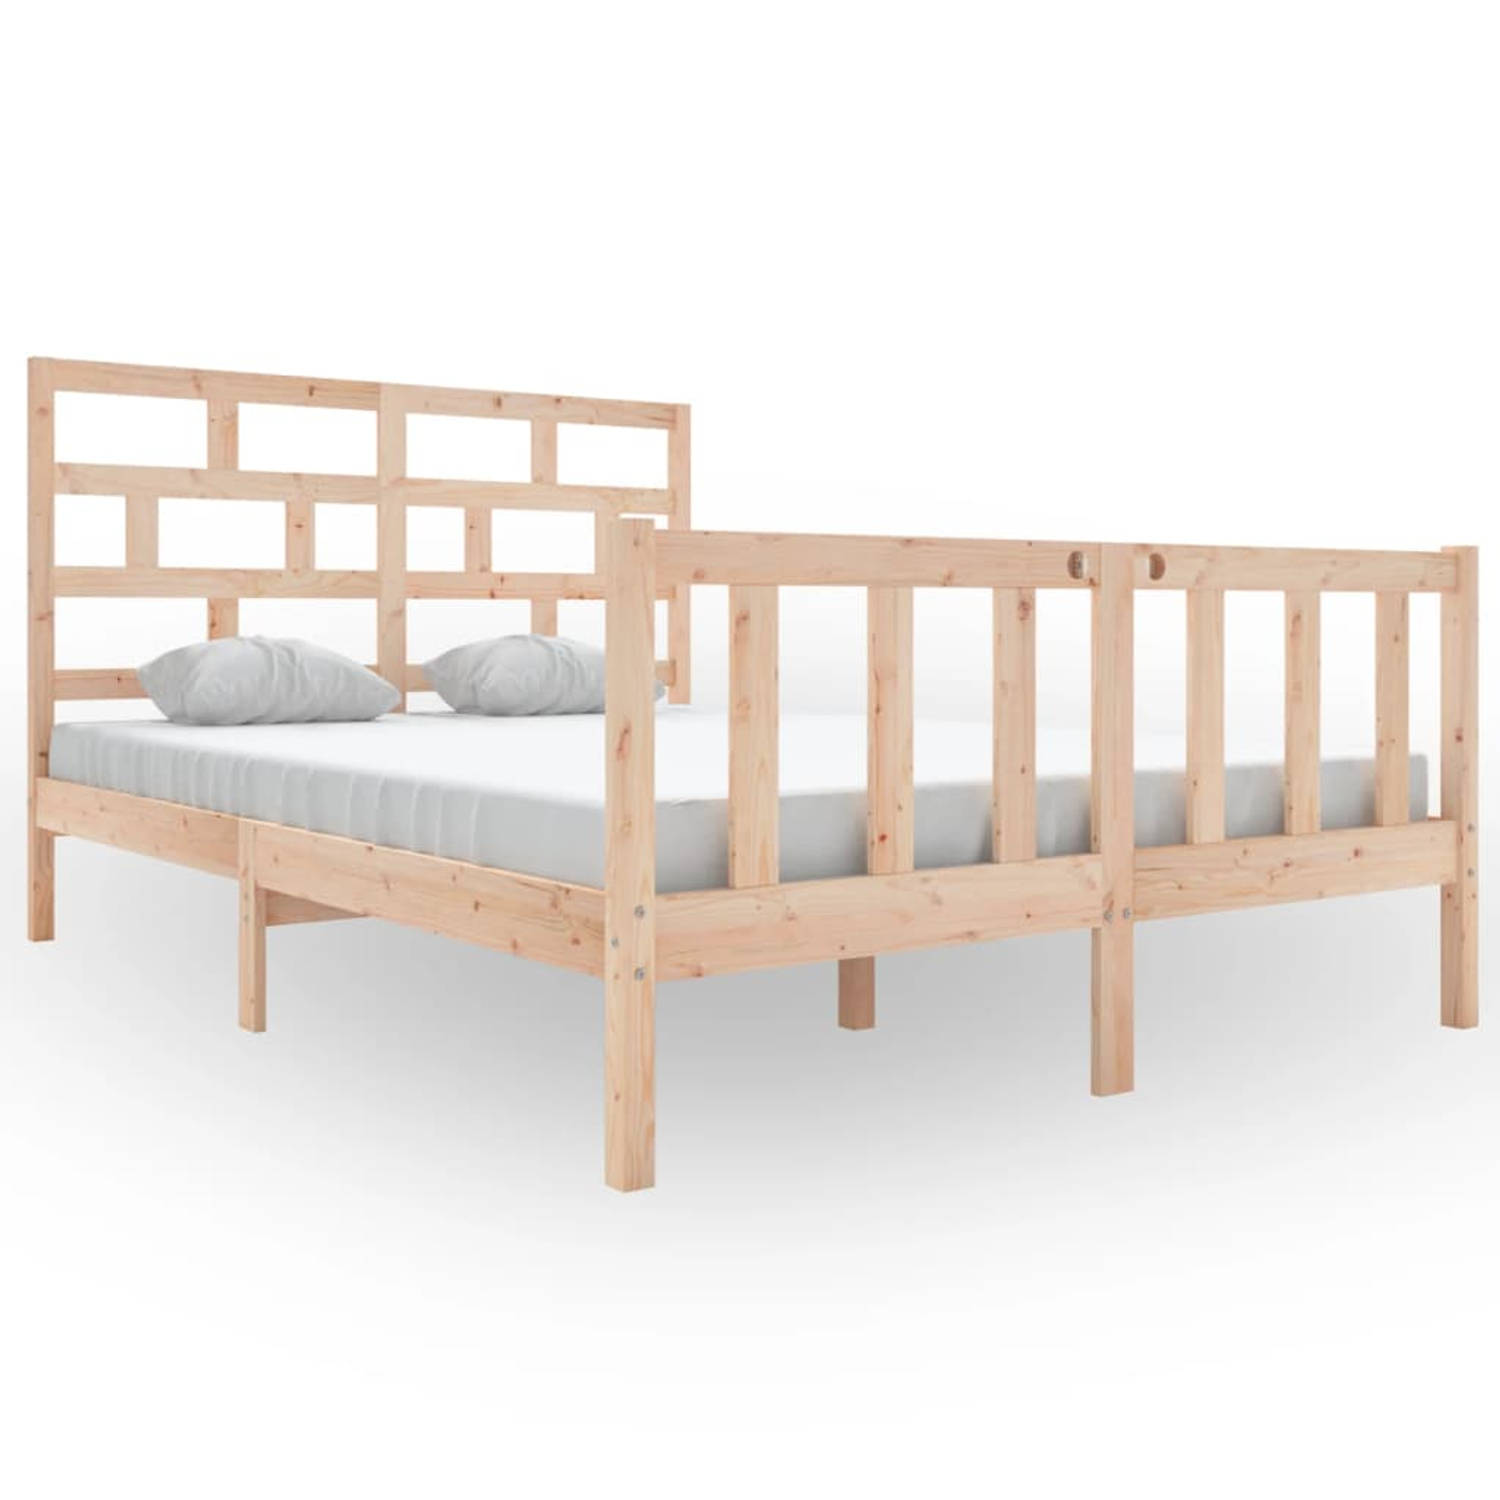 The Living Store Bedframe massief grenenhout 140x200 cm - Bedframe - Bedframes - Bed - Bedbodem - Ledikant - Bed Frame - Massief Houten Bedframe - Slaapmeubel - Tweepersoonsbed - B